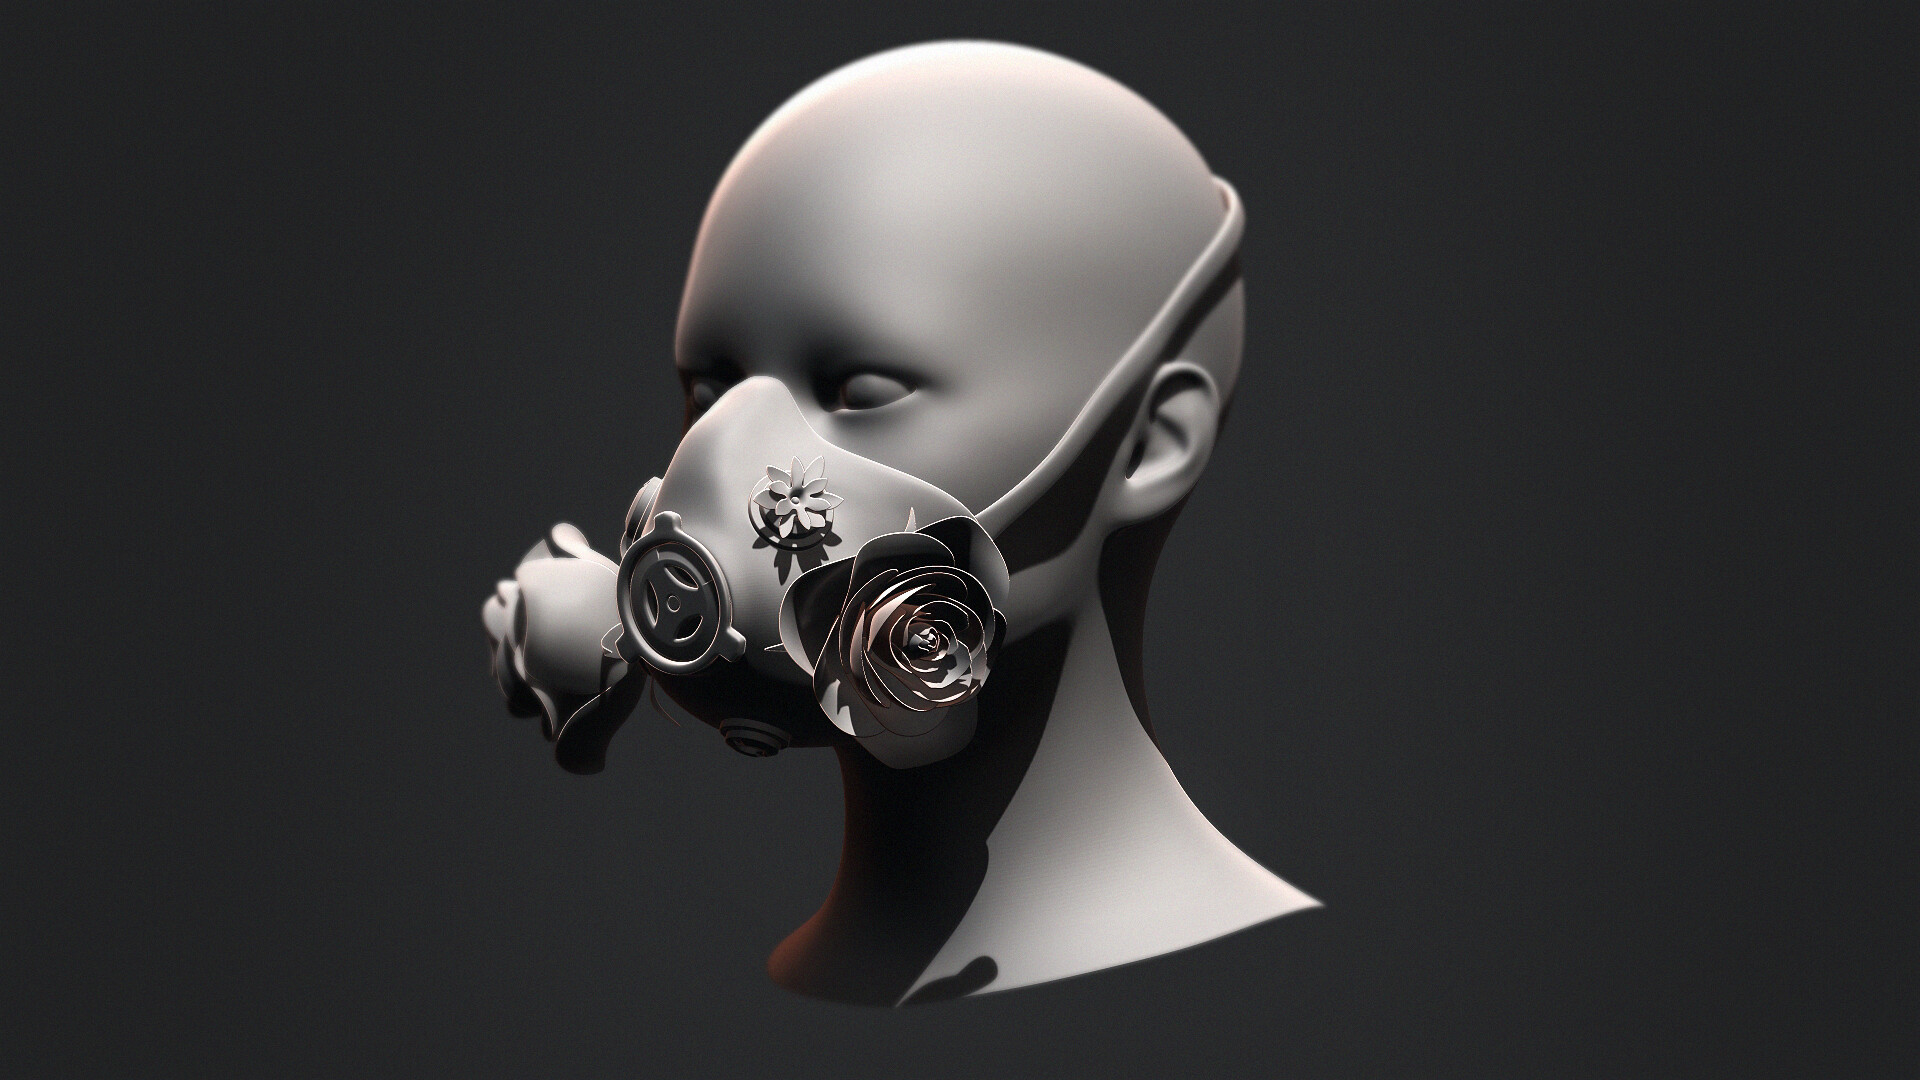 ArtStation - Cyberpunk Mask/Respirator